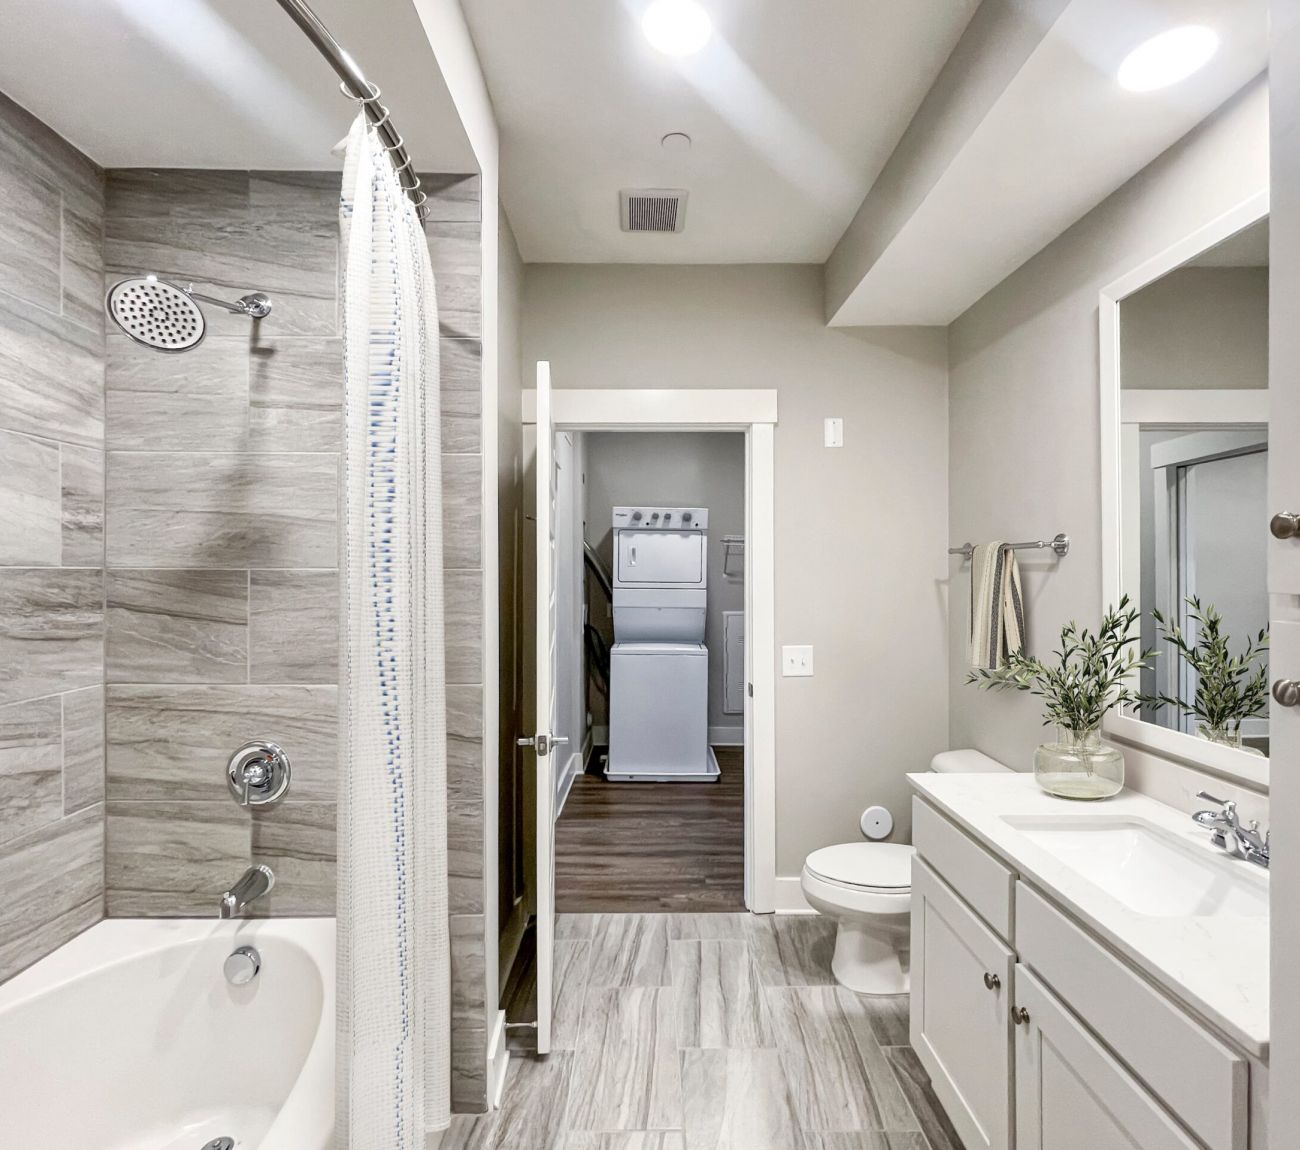 Gorgeous apartment bathroom with large soaking tub, rain showerhead, and large mirror